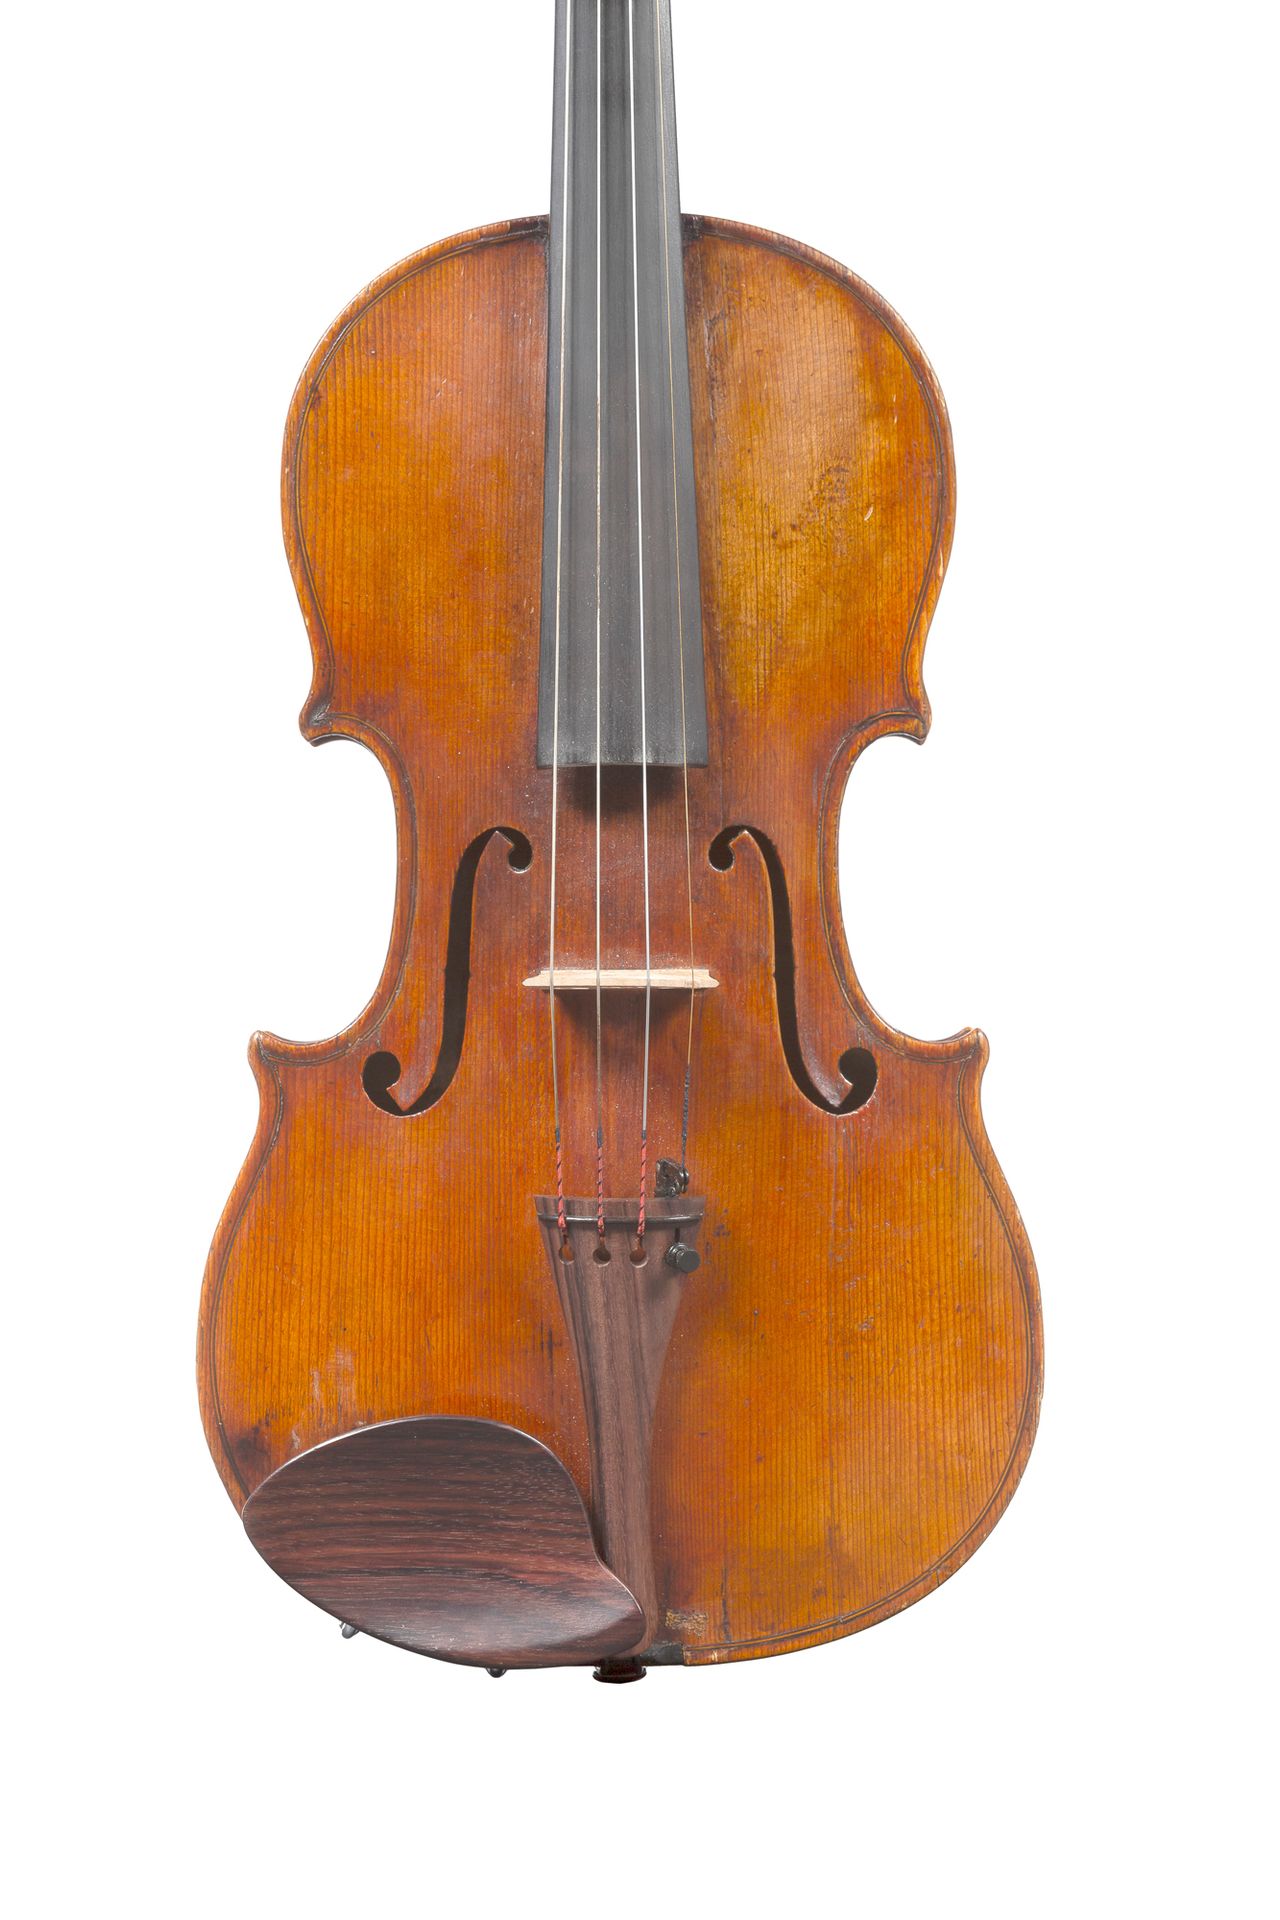 Null 18世纪末-19世纪初的法国小提琴
台面、边缘附近的夹板和后跟上的修复物
另一个制作者的头像 
背面361毫米